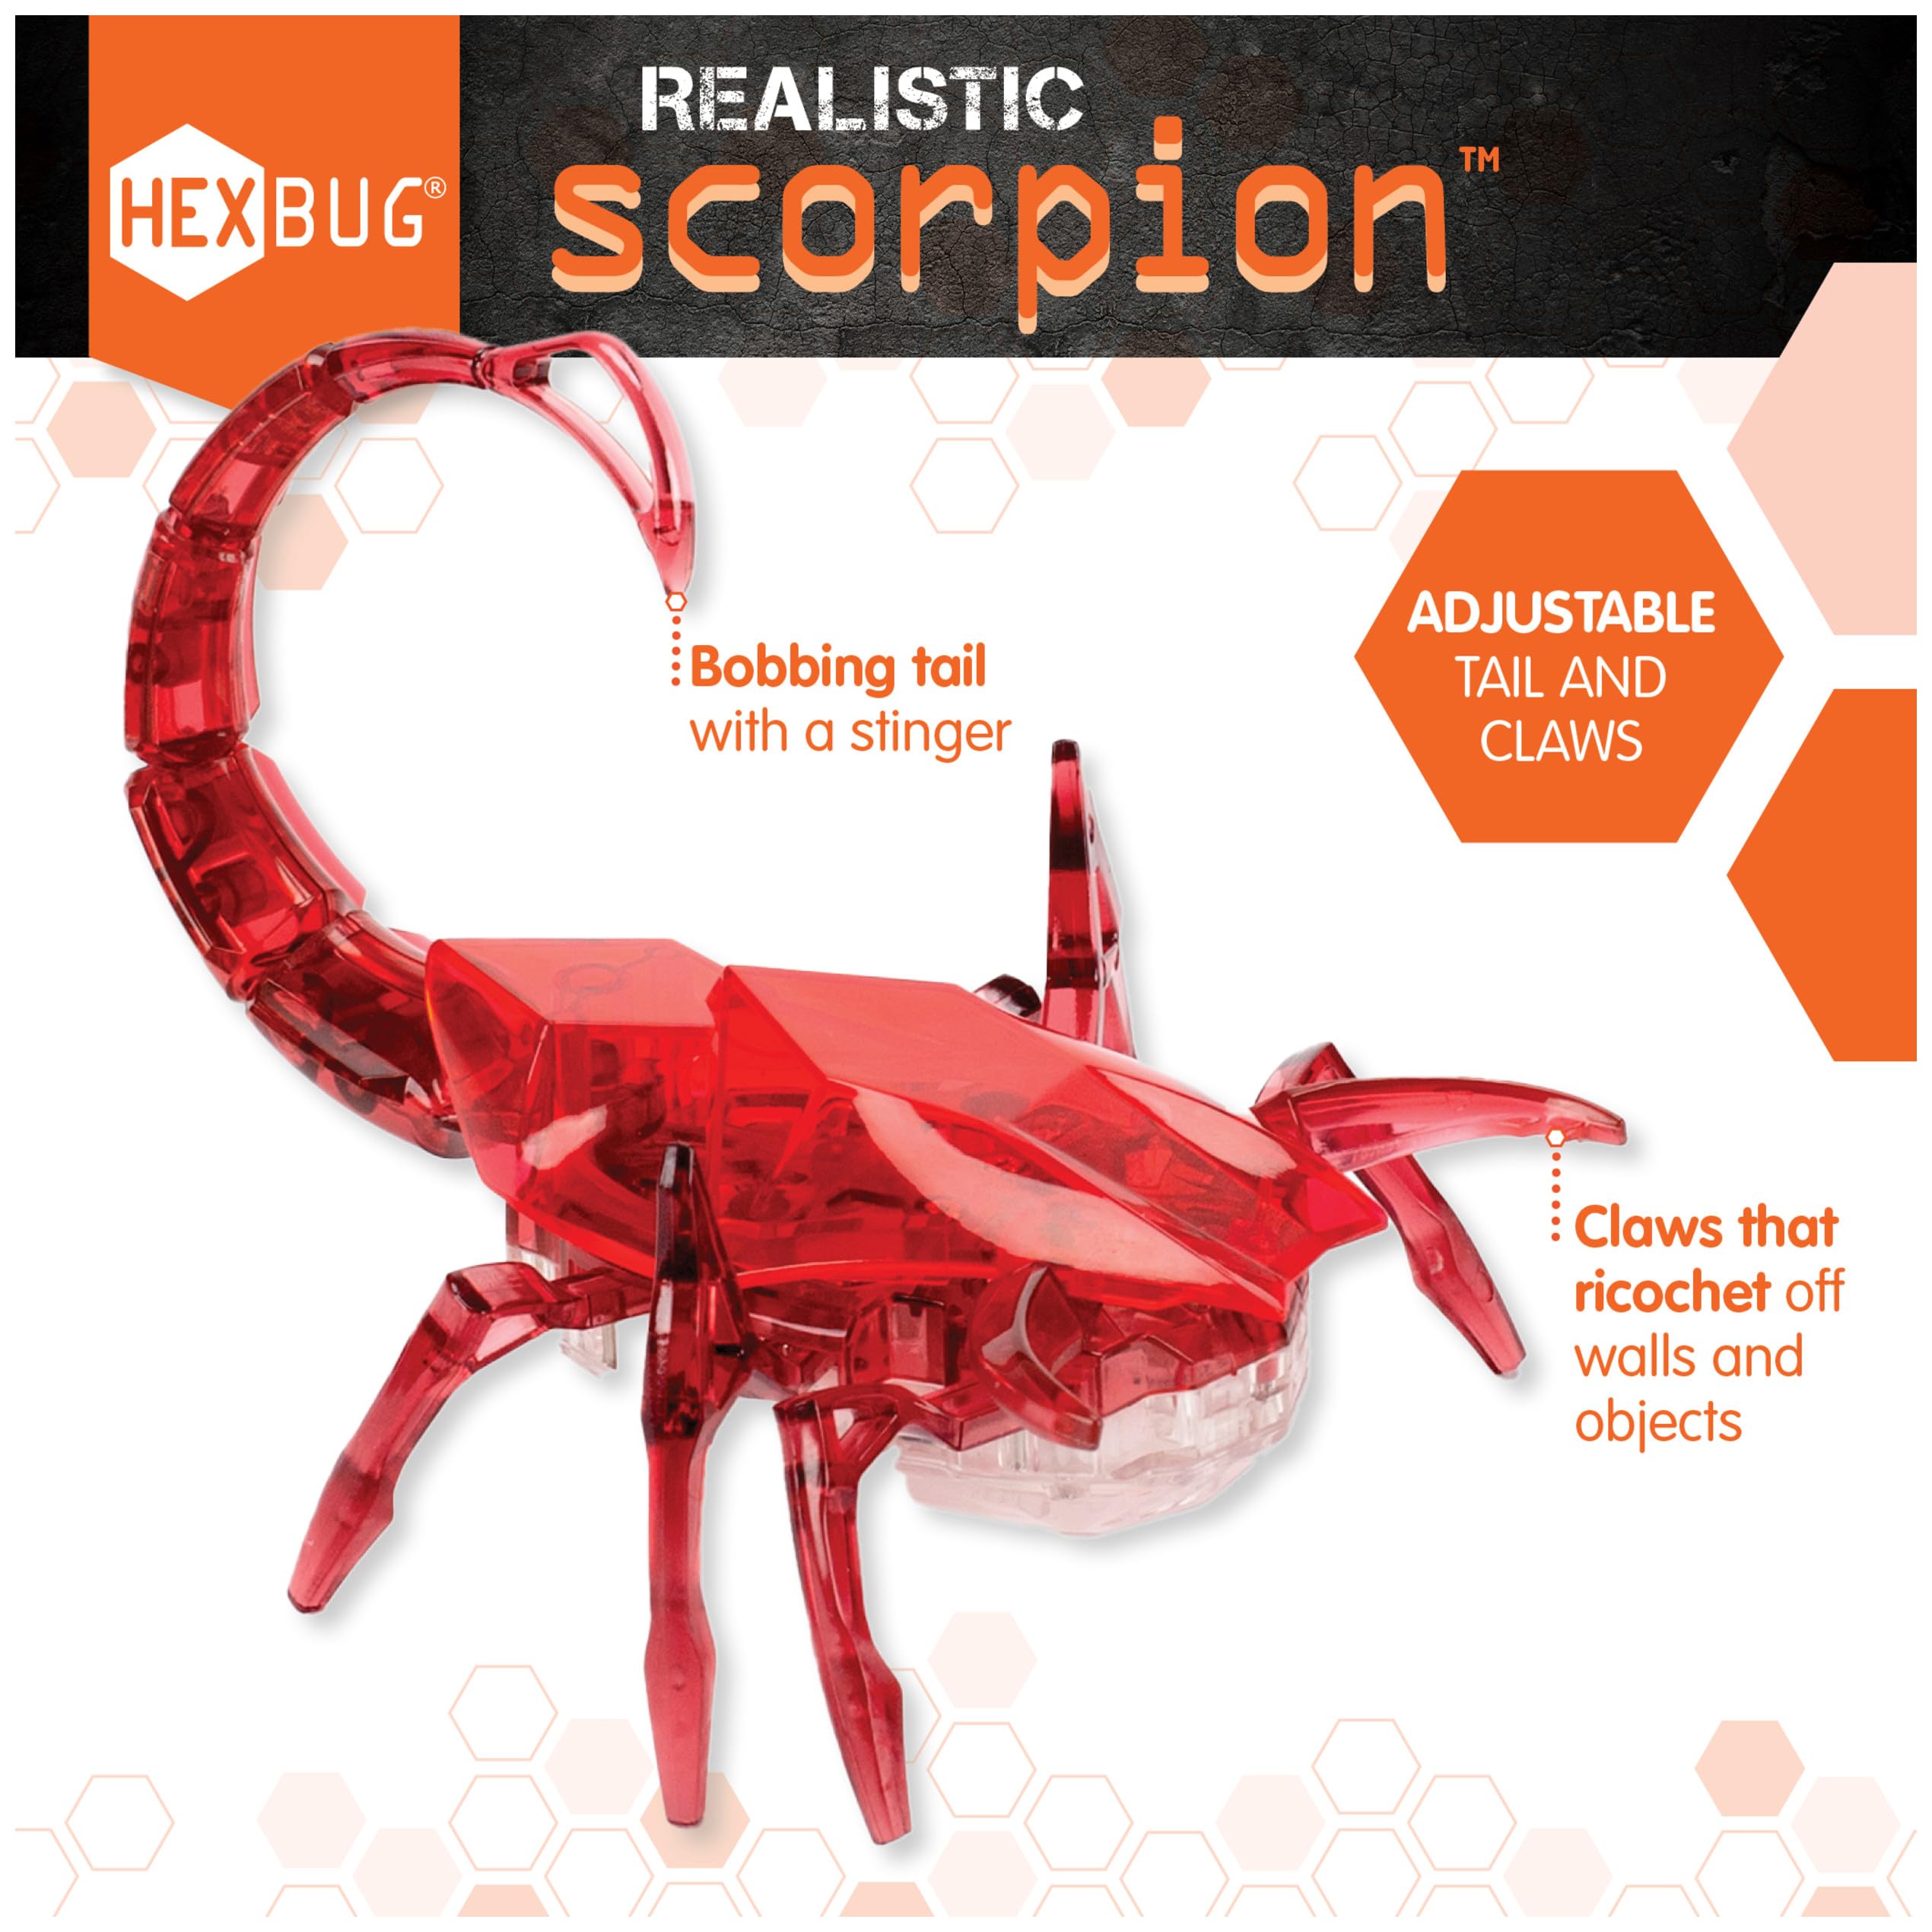 HEXBUG Robotic Scorpion, Autonomous Mechanic Scorpion Toys for Kids, Adjustable Robotic Scorpion Figure, STEM Toys for Boys & Girls Ages 8 & Up, Styles May Vary